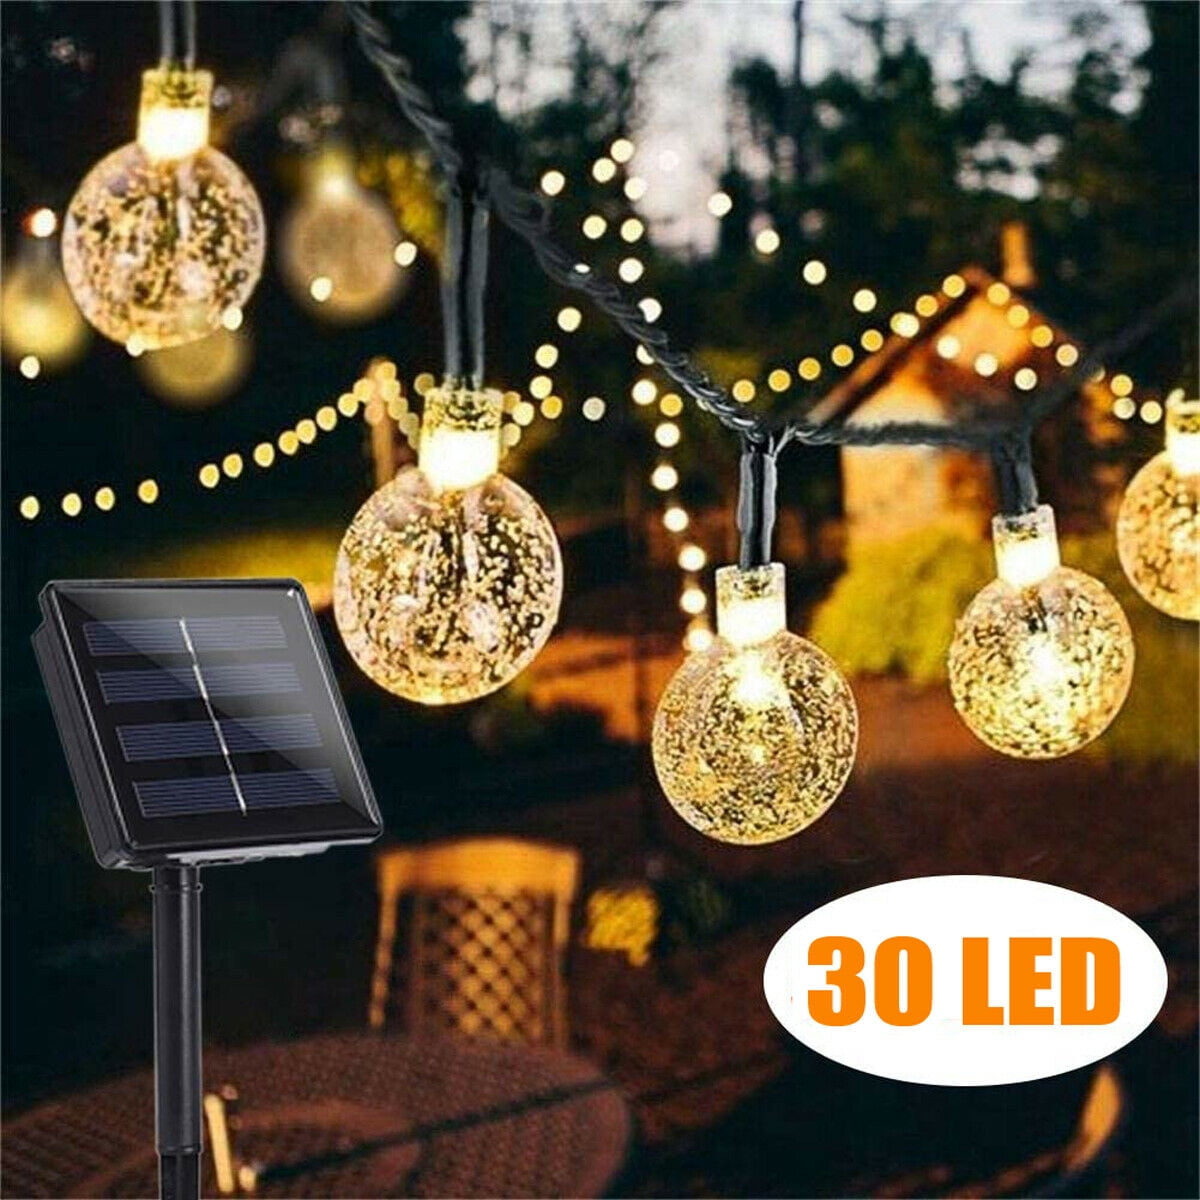 Solar Powered 30 LED Waterproof String Light Garden Path Yard Decor Lamp Outdoor 